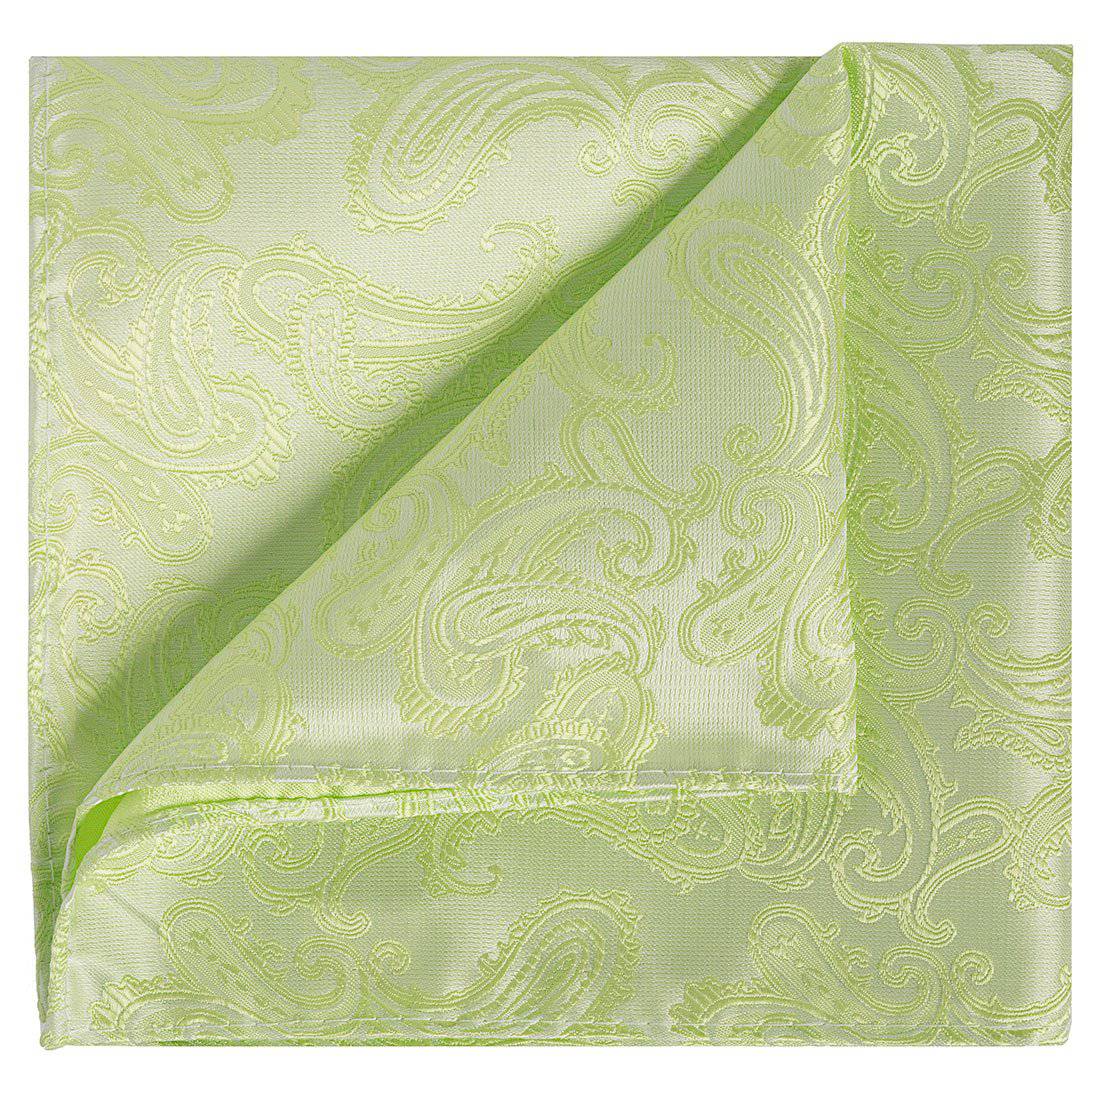 Tea Green on White Paisley Pocket Square - Tie, bowtie, pocket square  | Kissties